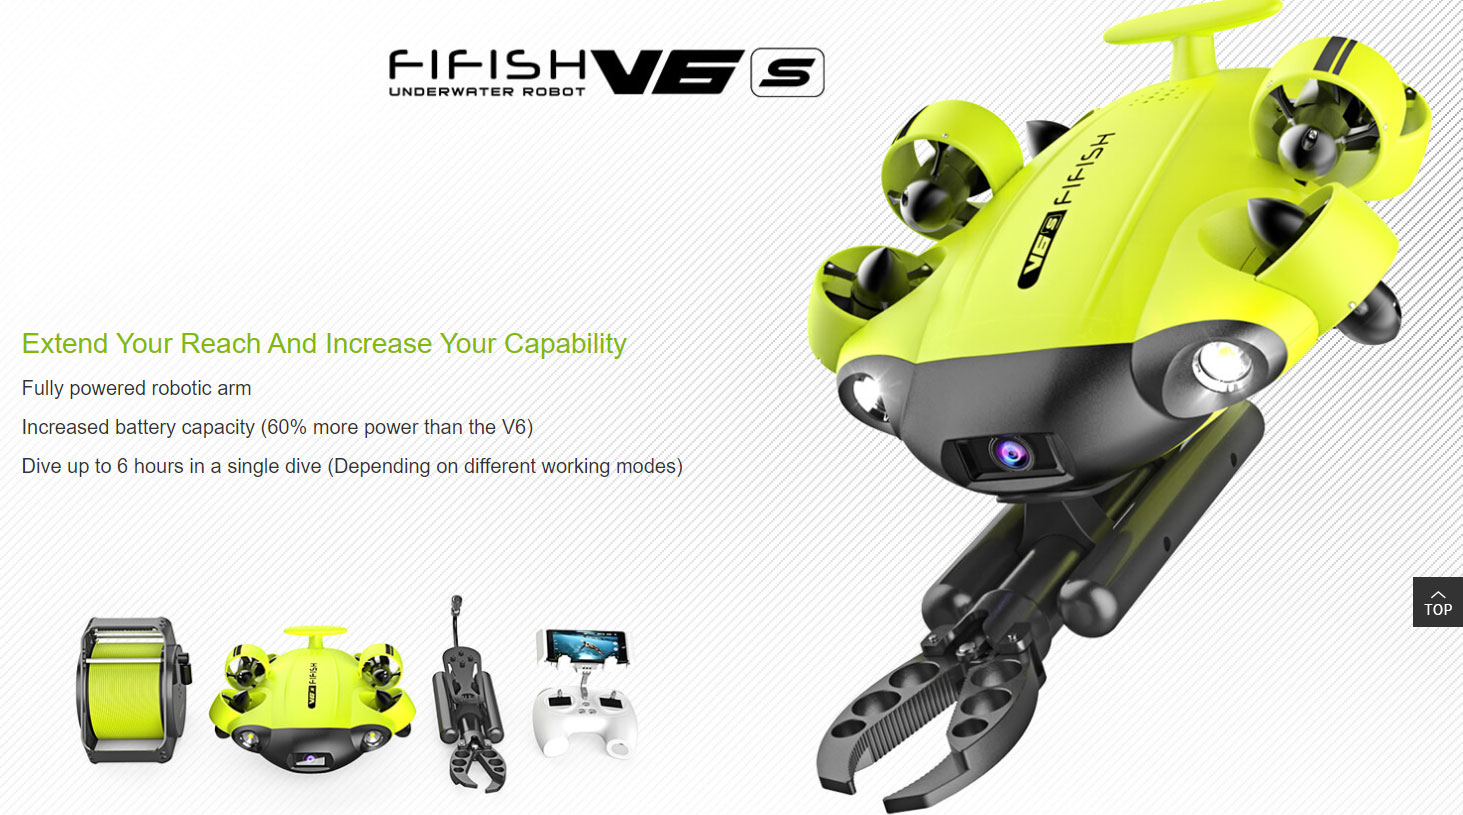 fifish-v6s-underwater-drone-photo.jpg